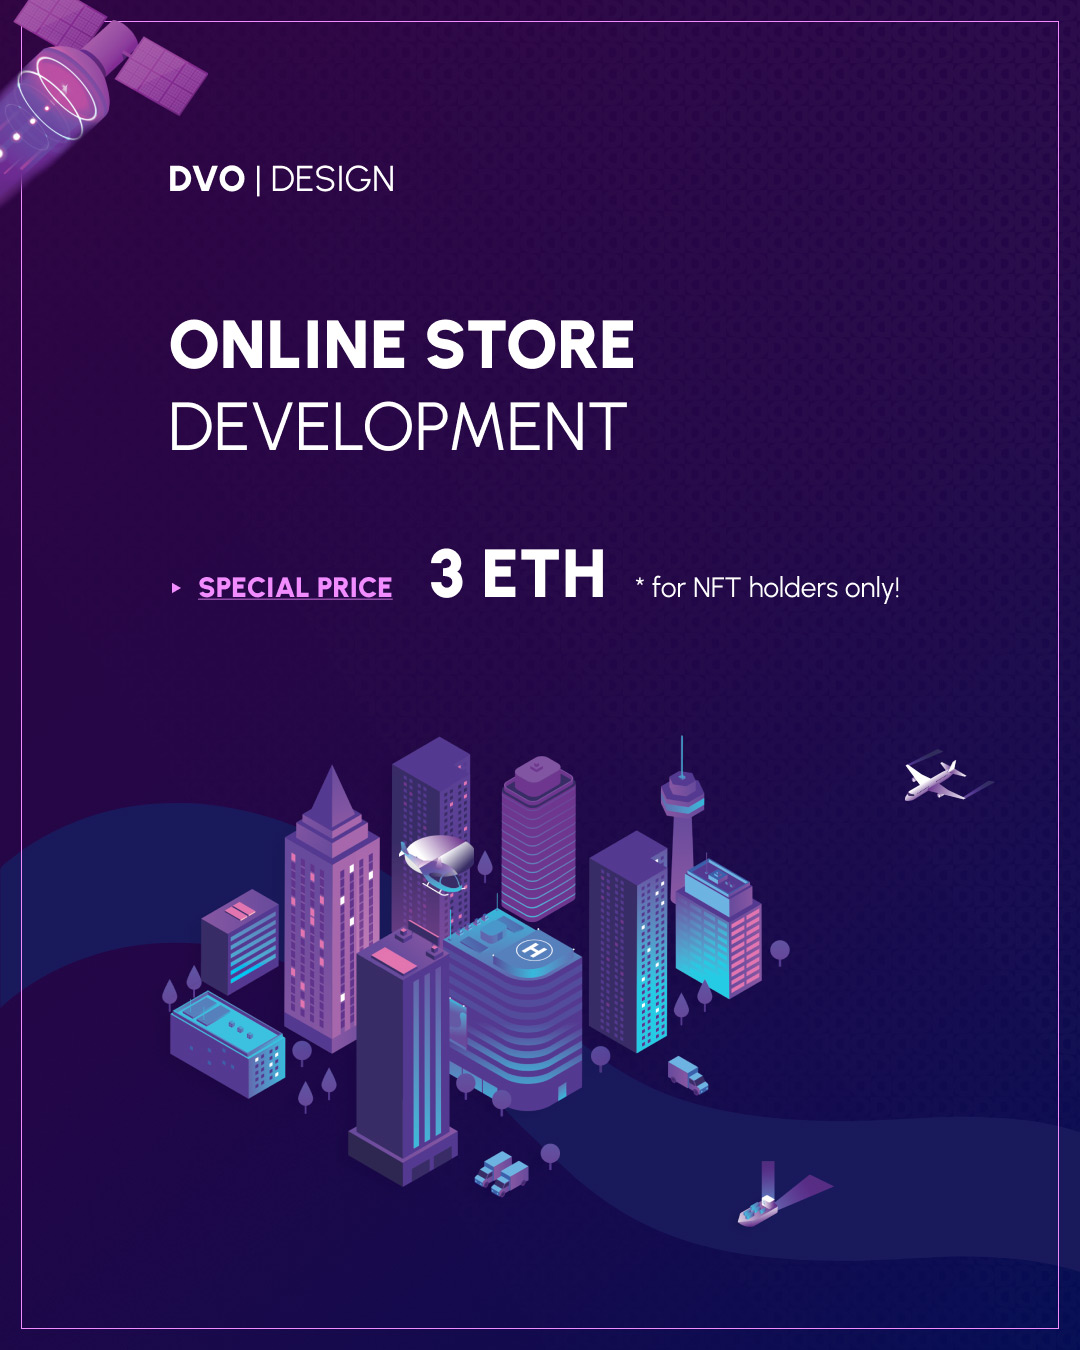 Online store development | Dvo Design